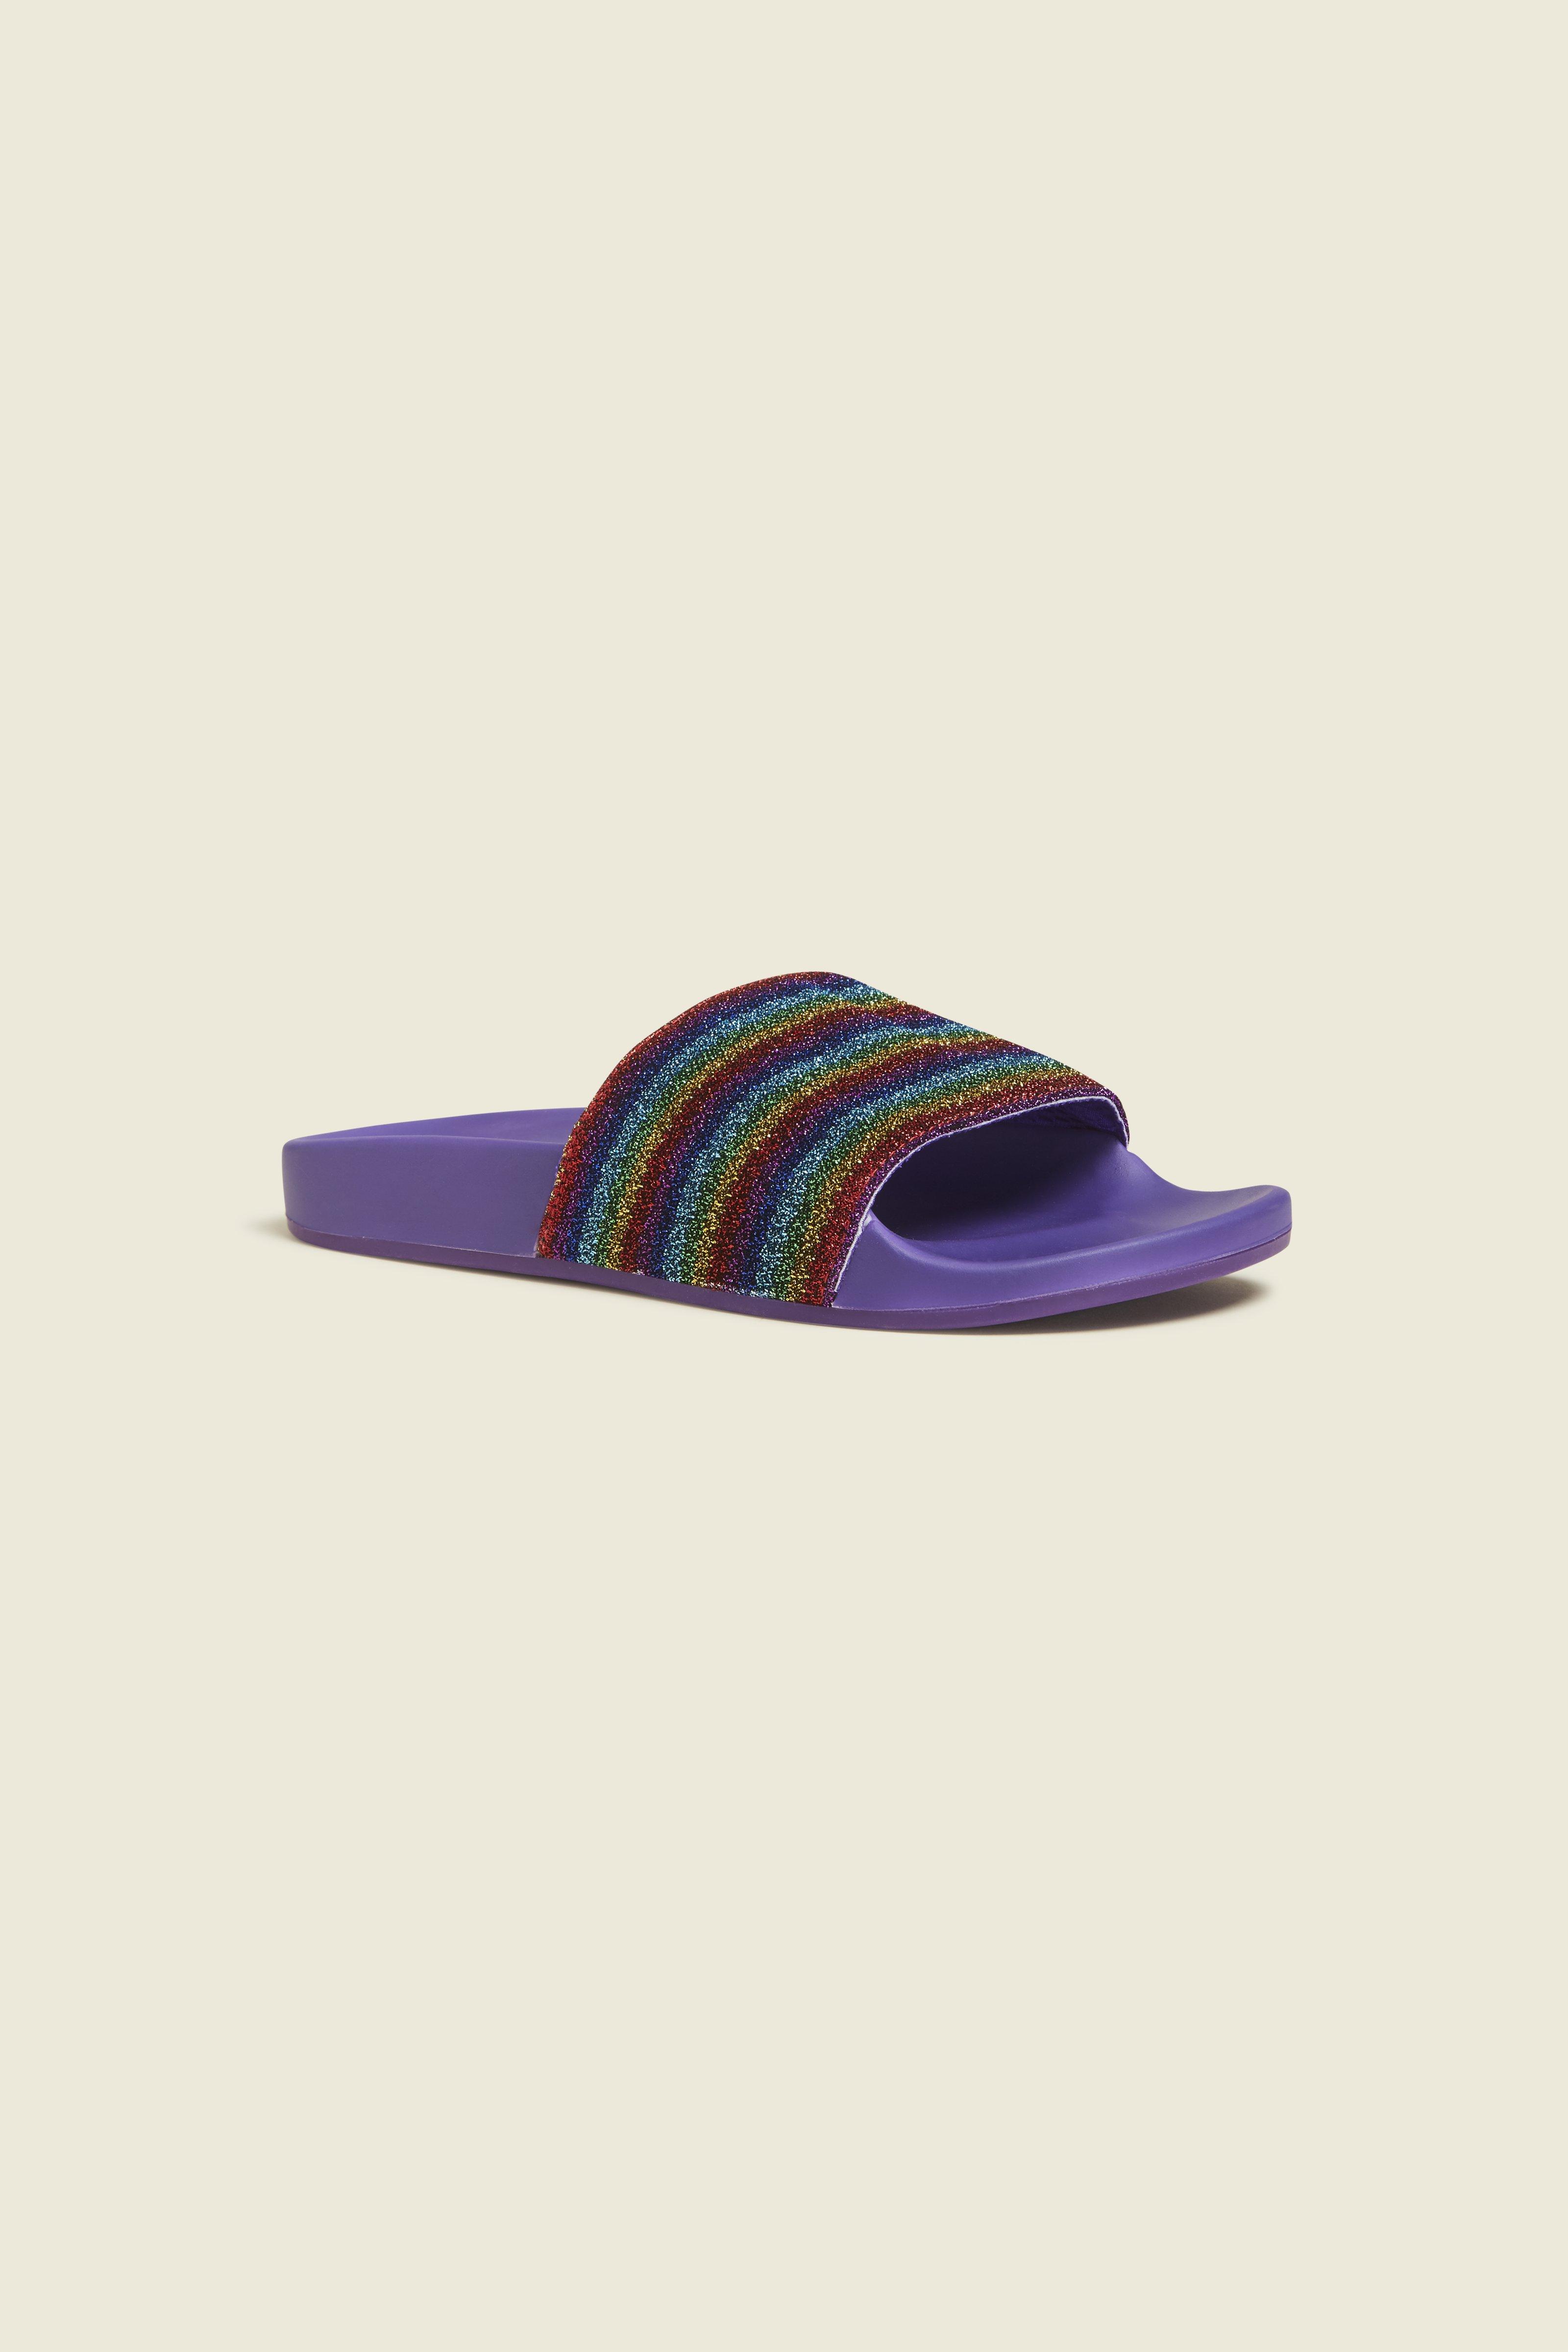 MARC JACOBS Purple Lurex Stripe Cooper Slide Sandals in Purple Multi ...